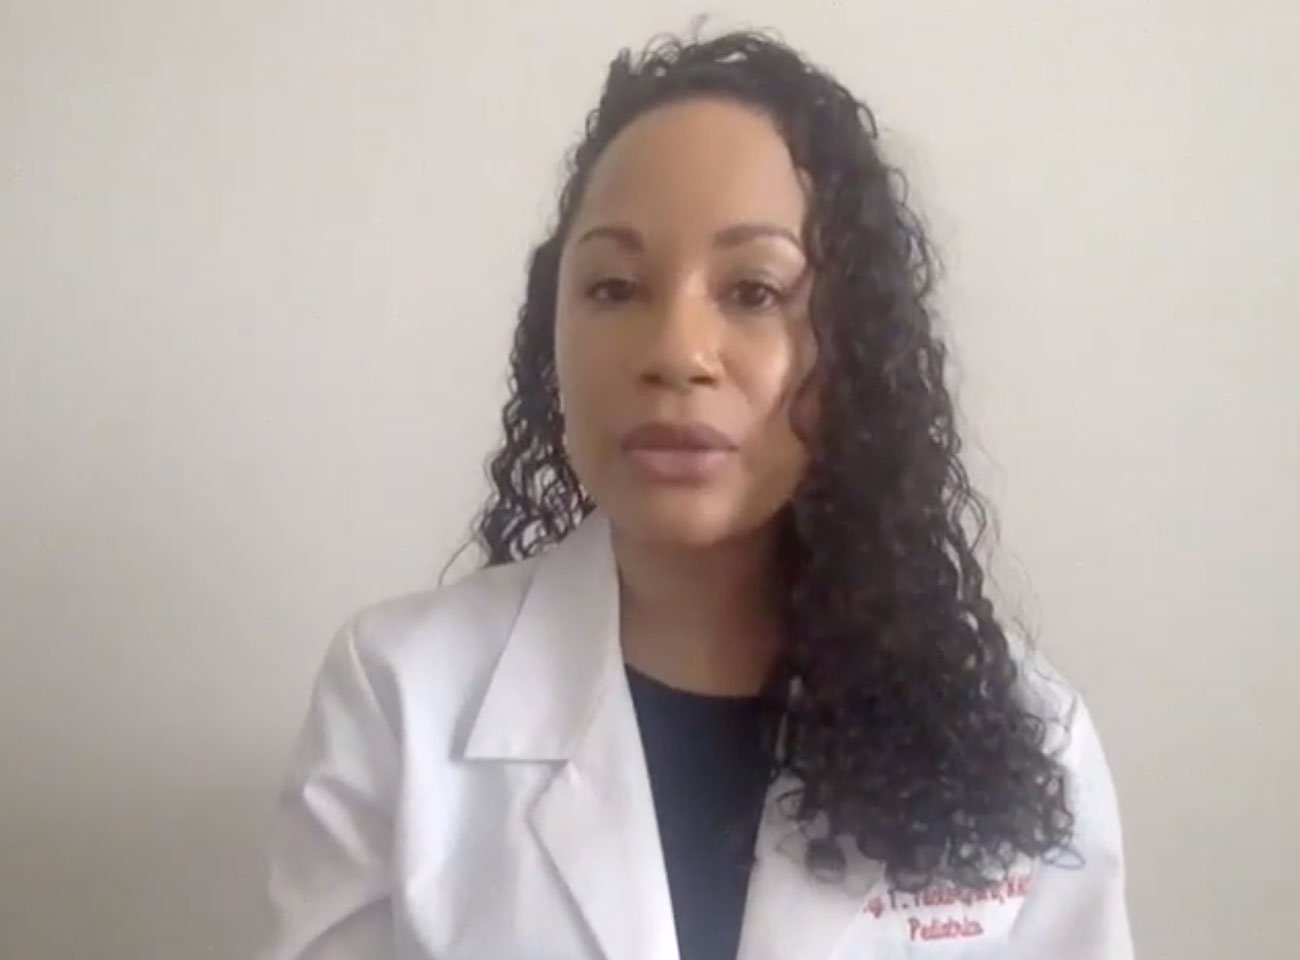 Dr. Tiffany Tucker provides telehealth and telemedicine for Philadelphia Mental Health Center